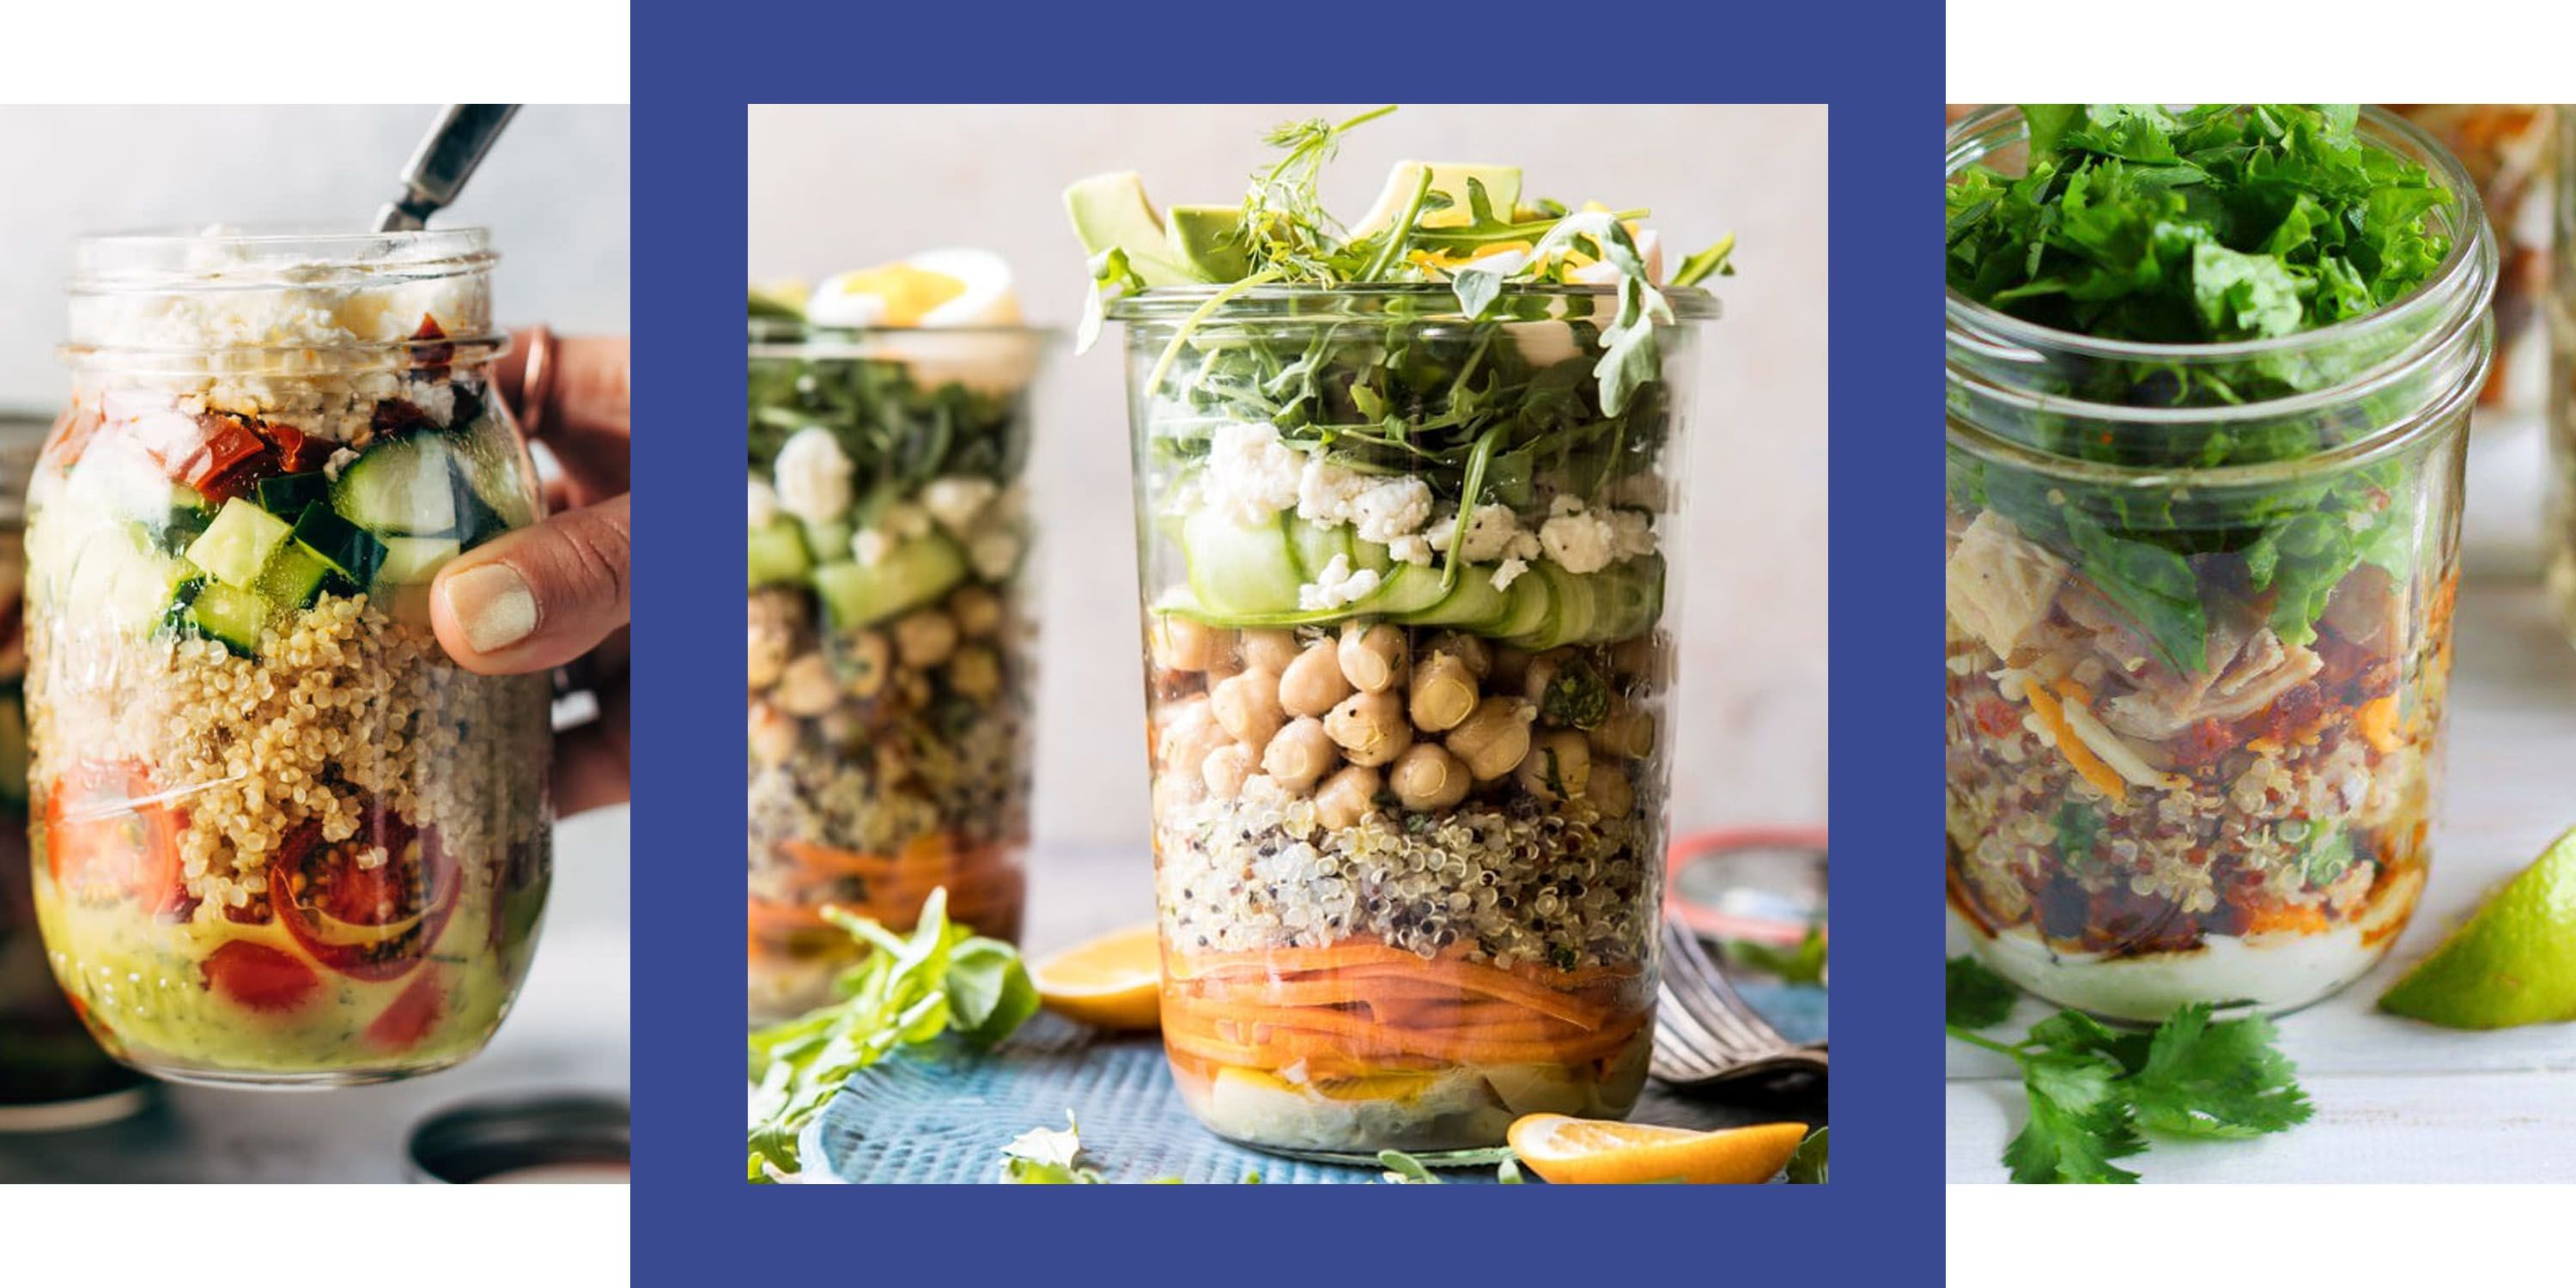 Low Calorie Salad in a Jar